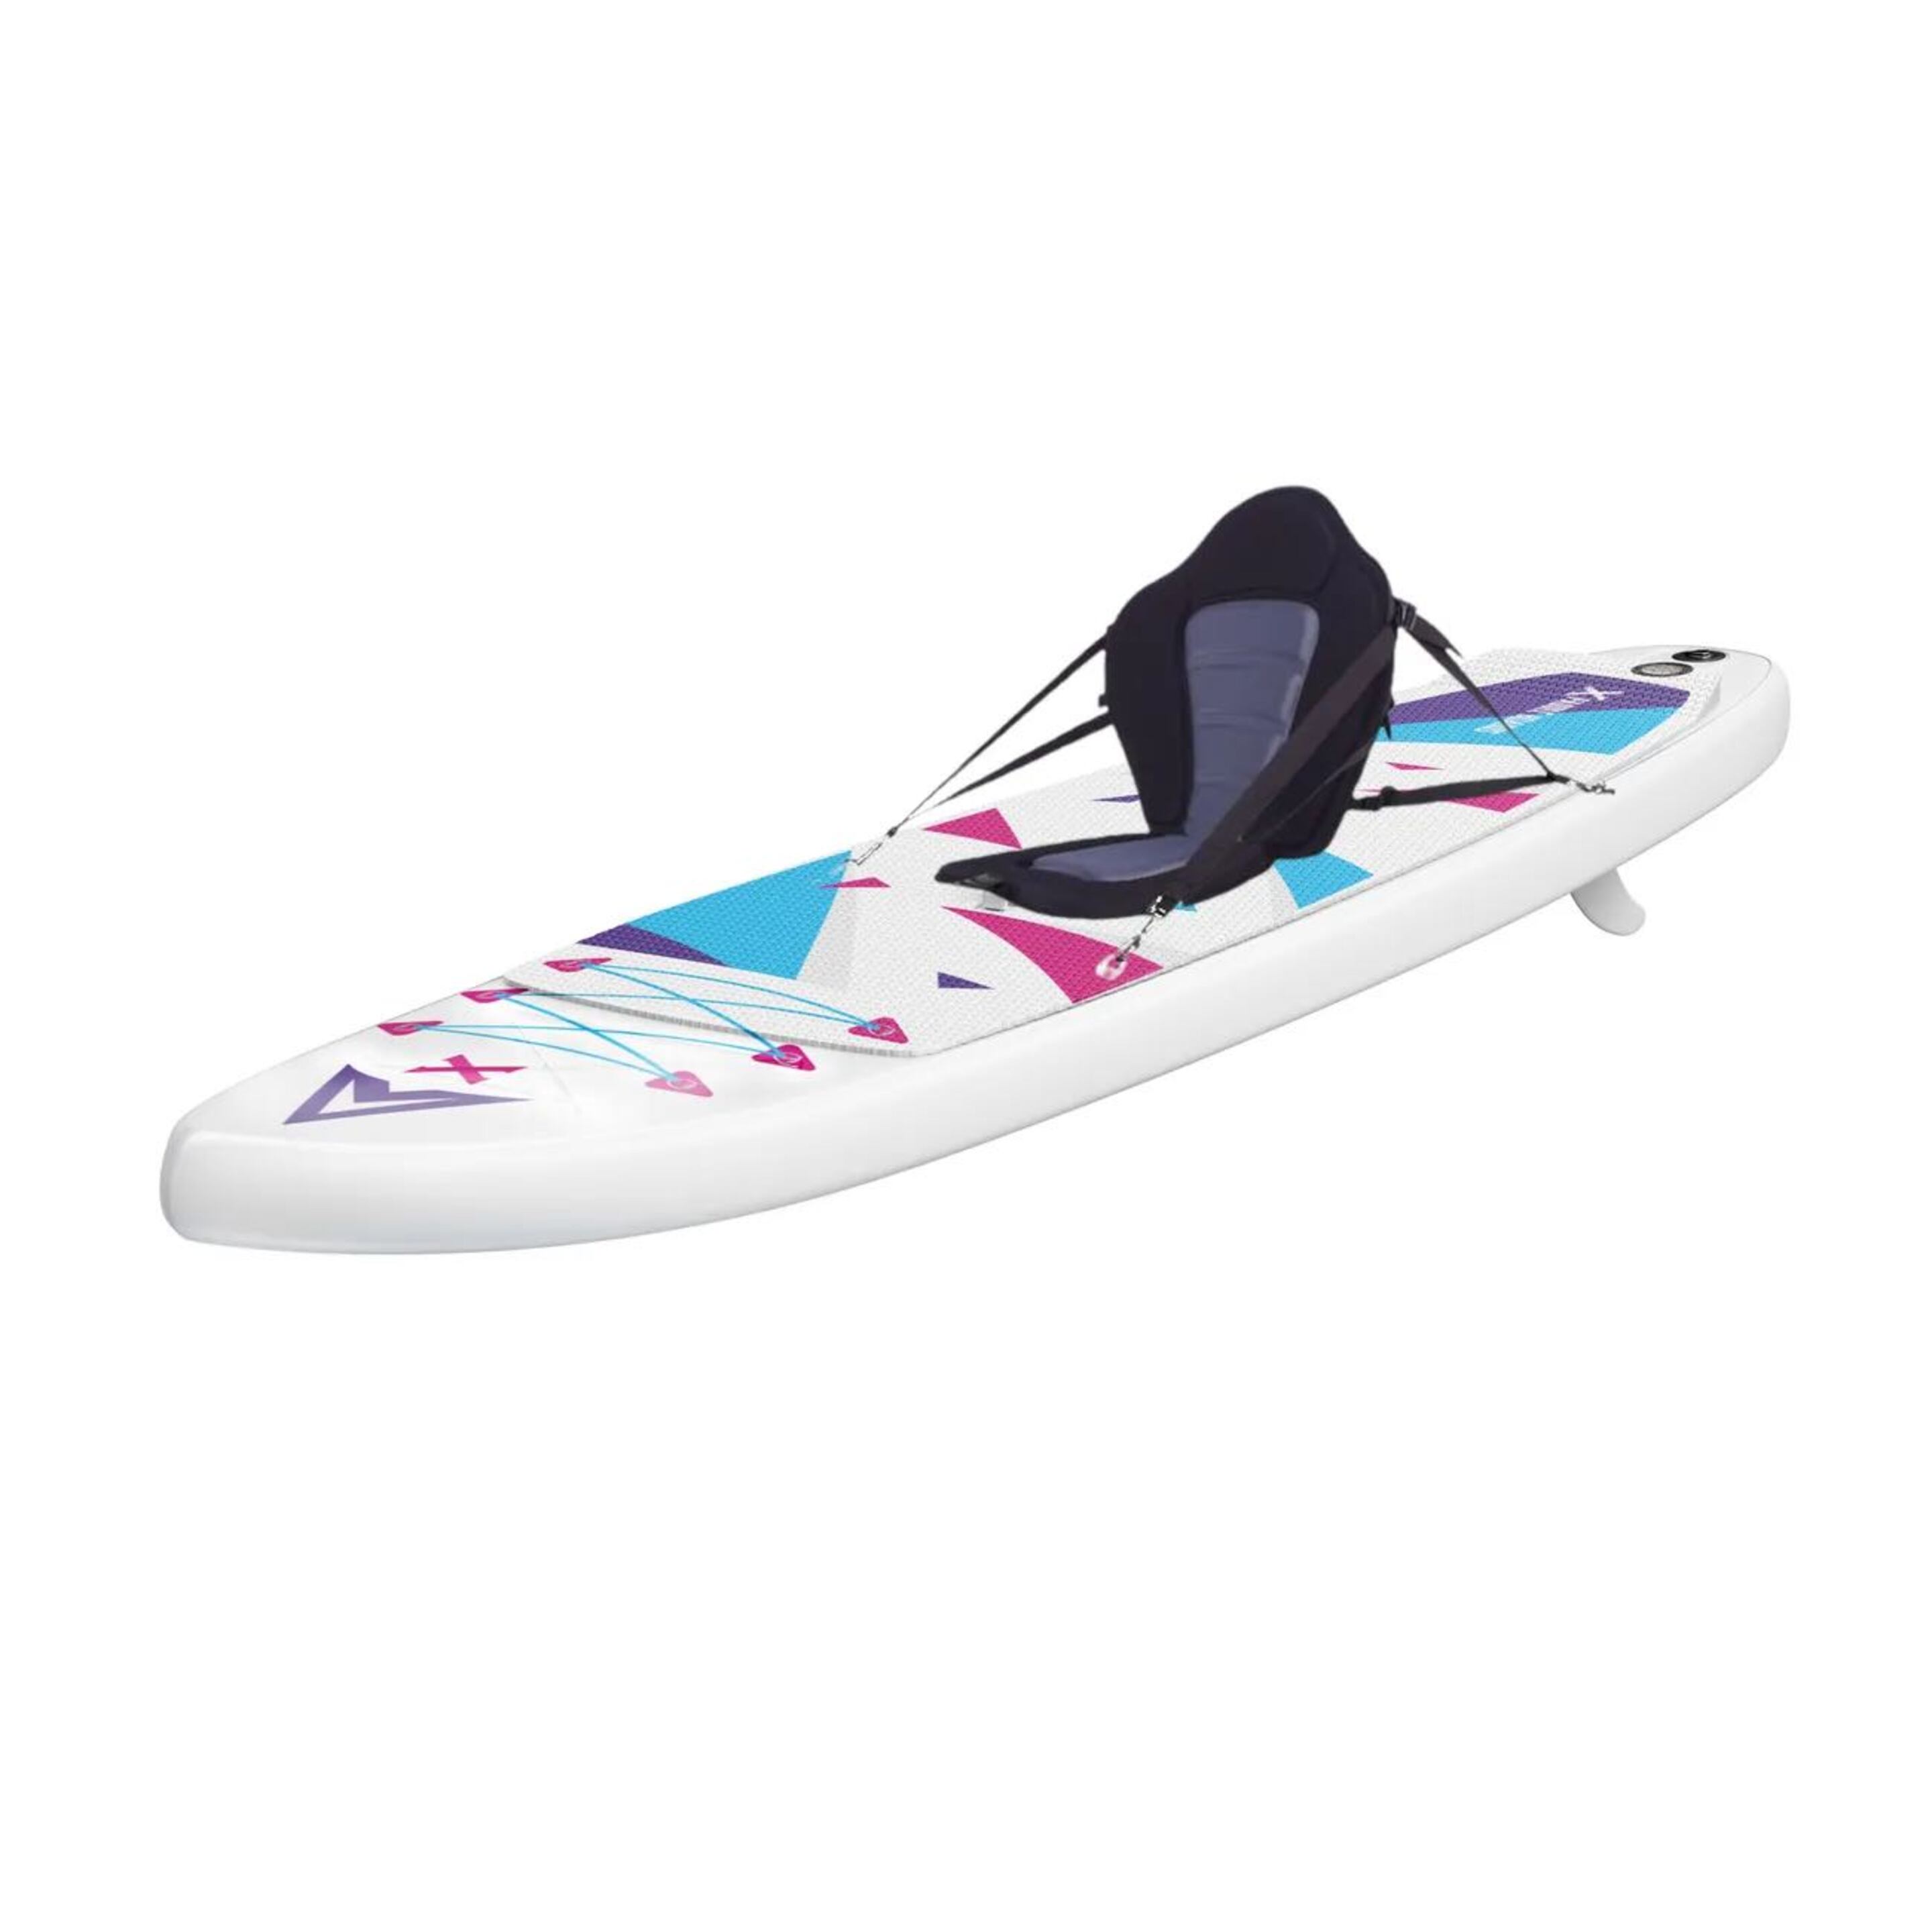 Tabla De Paddle Surf Hinchable  X-fun Kayak  320 X 82 X 15 Cm - Azul Claro/Rojo  MKP